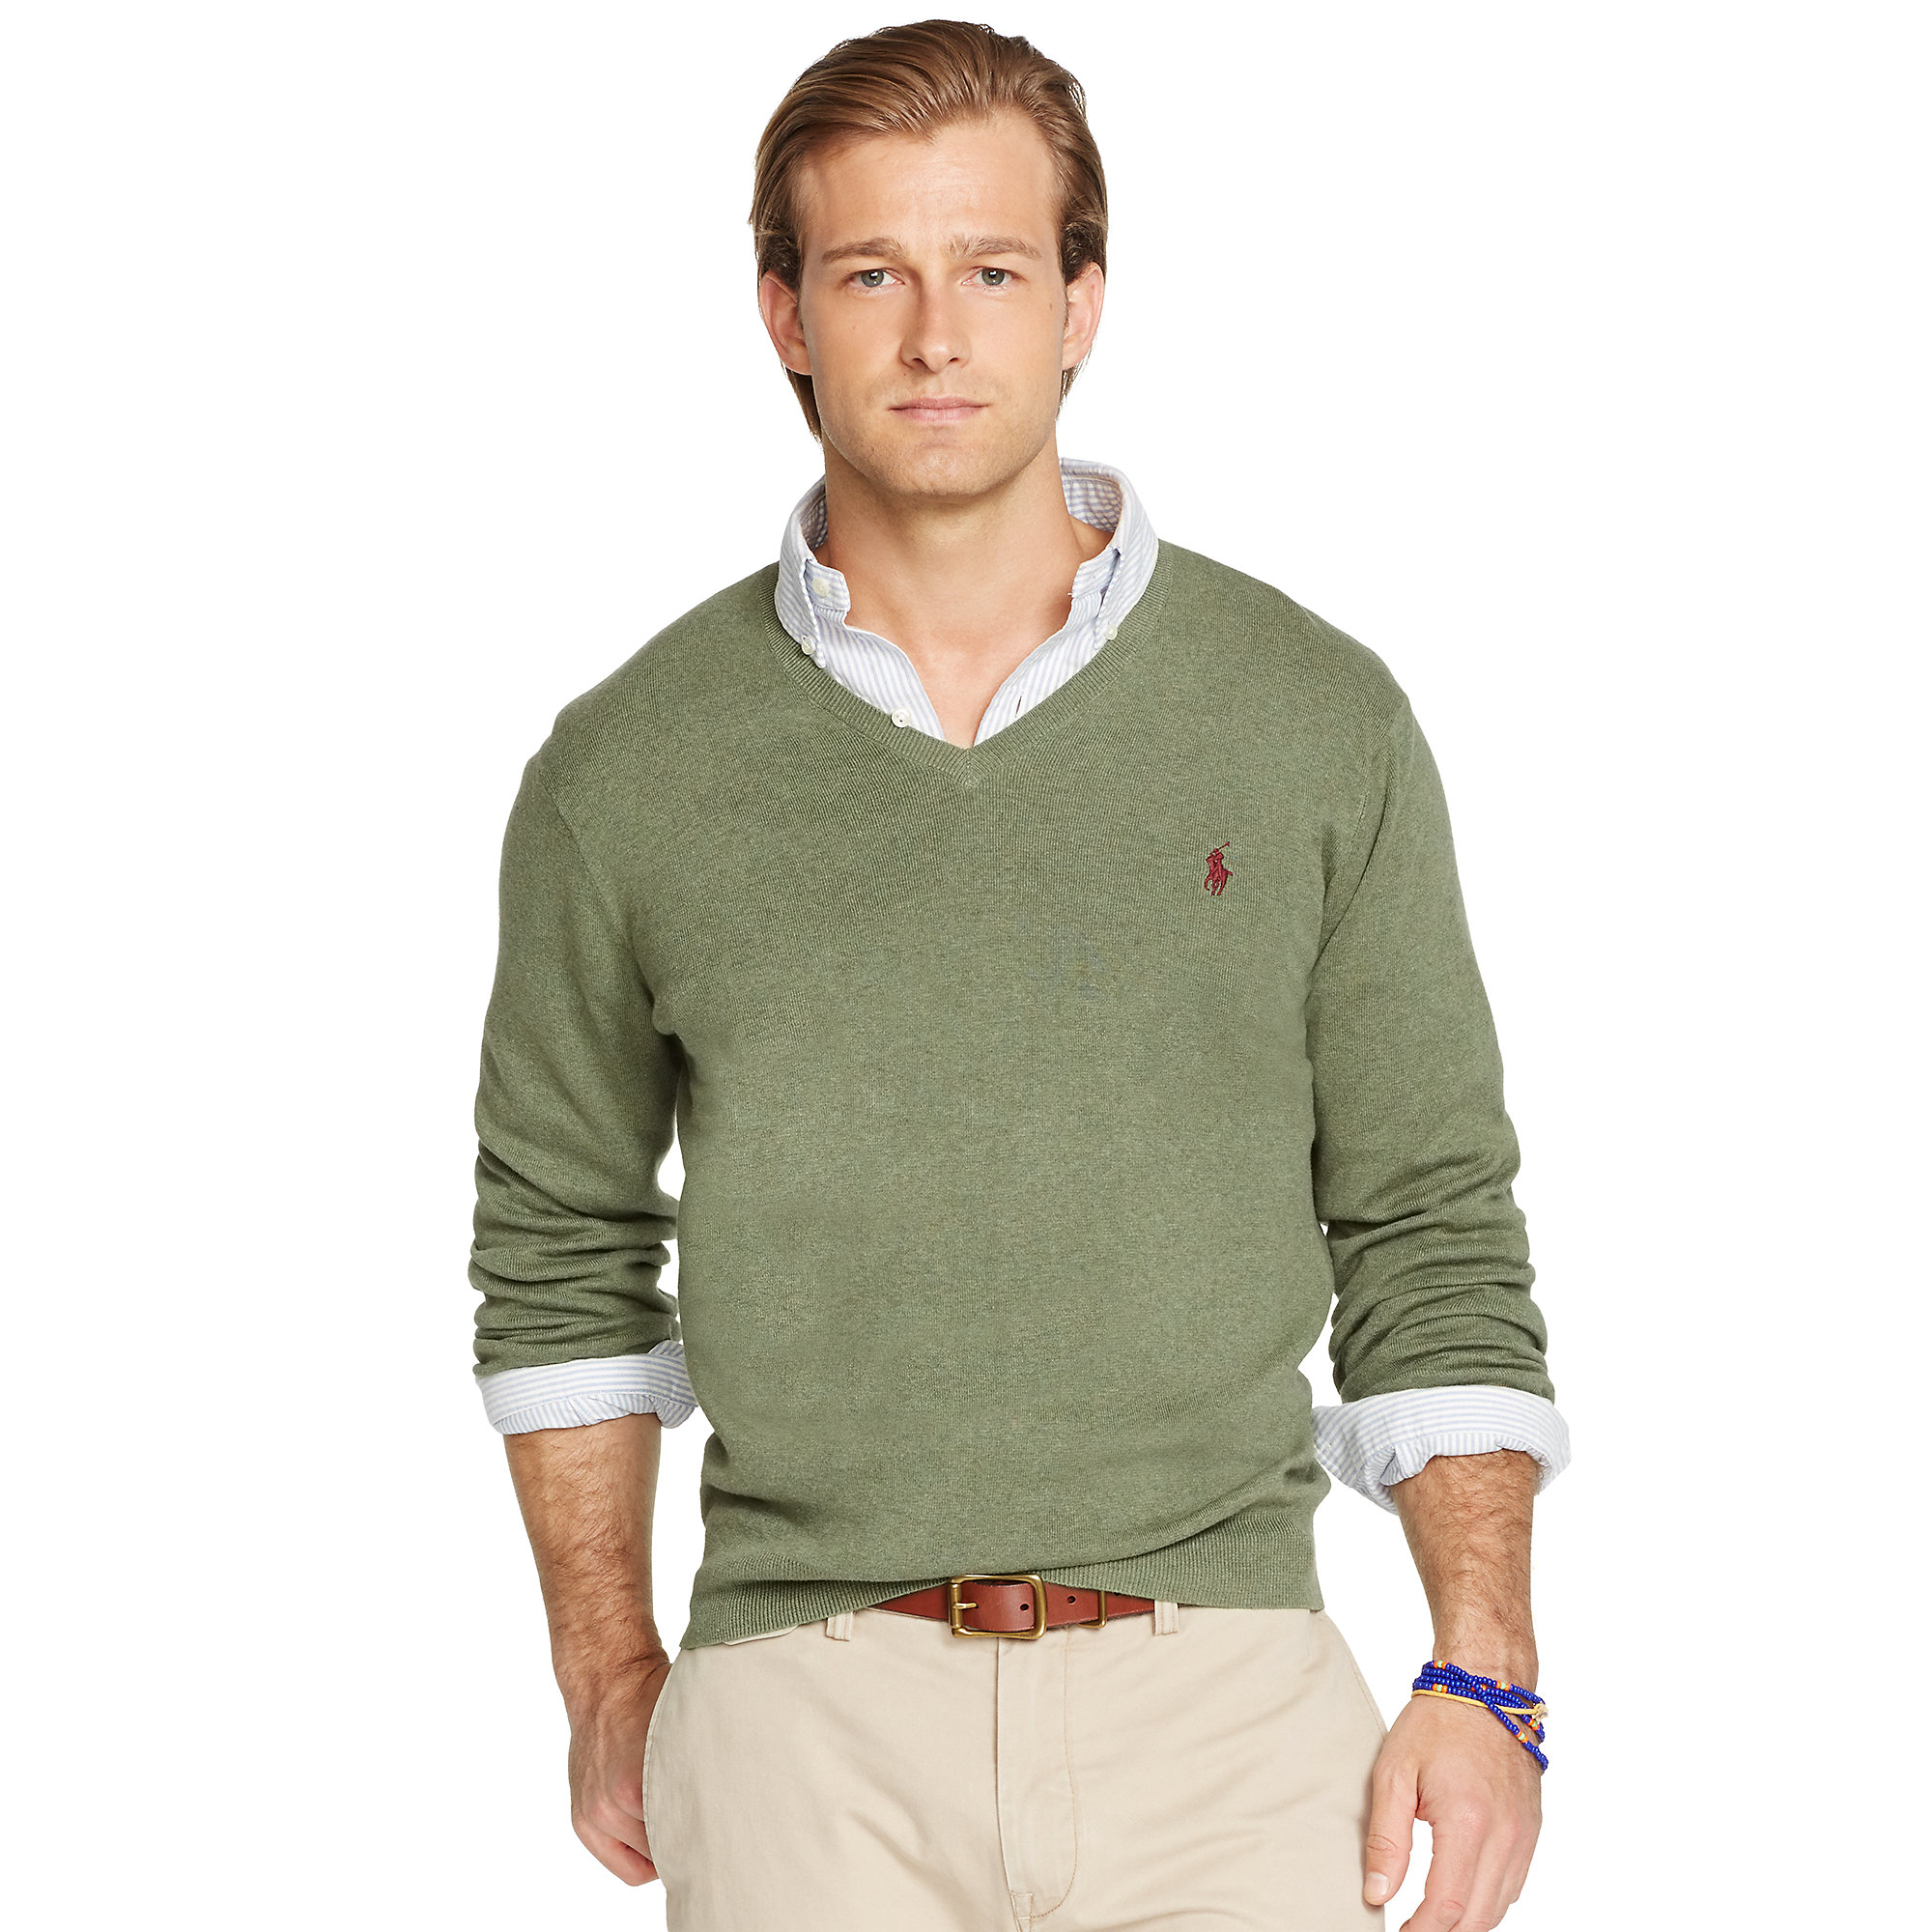 Polo Ralph Lauren Pima Cotton V-Neck Sweater in Green for Men - Lyst